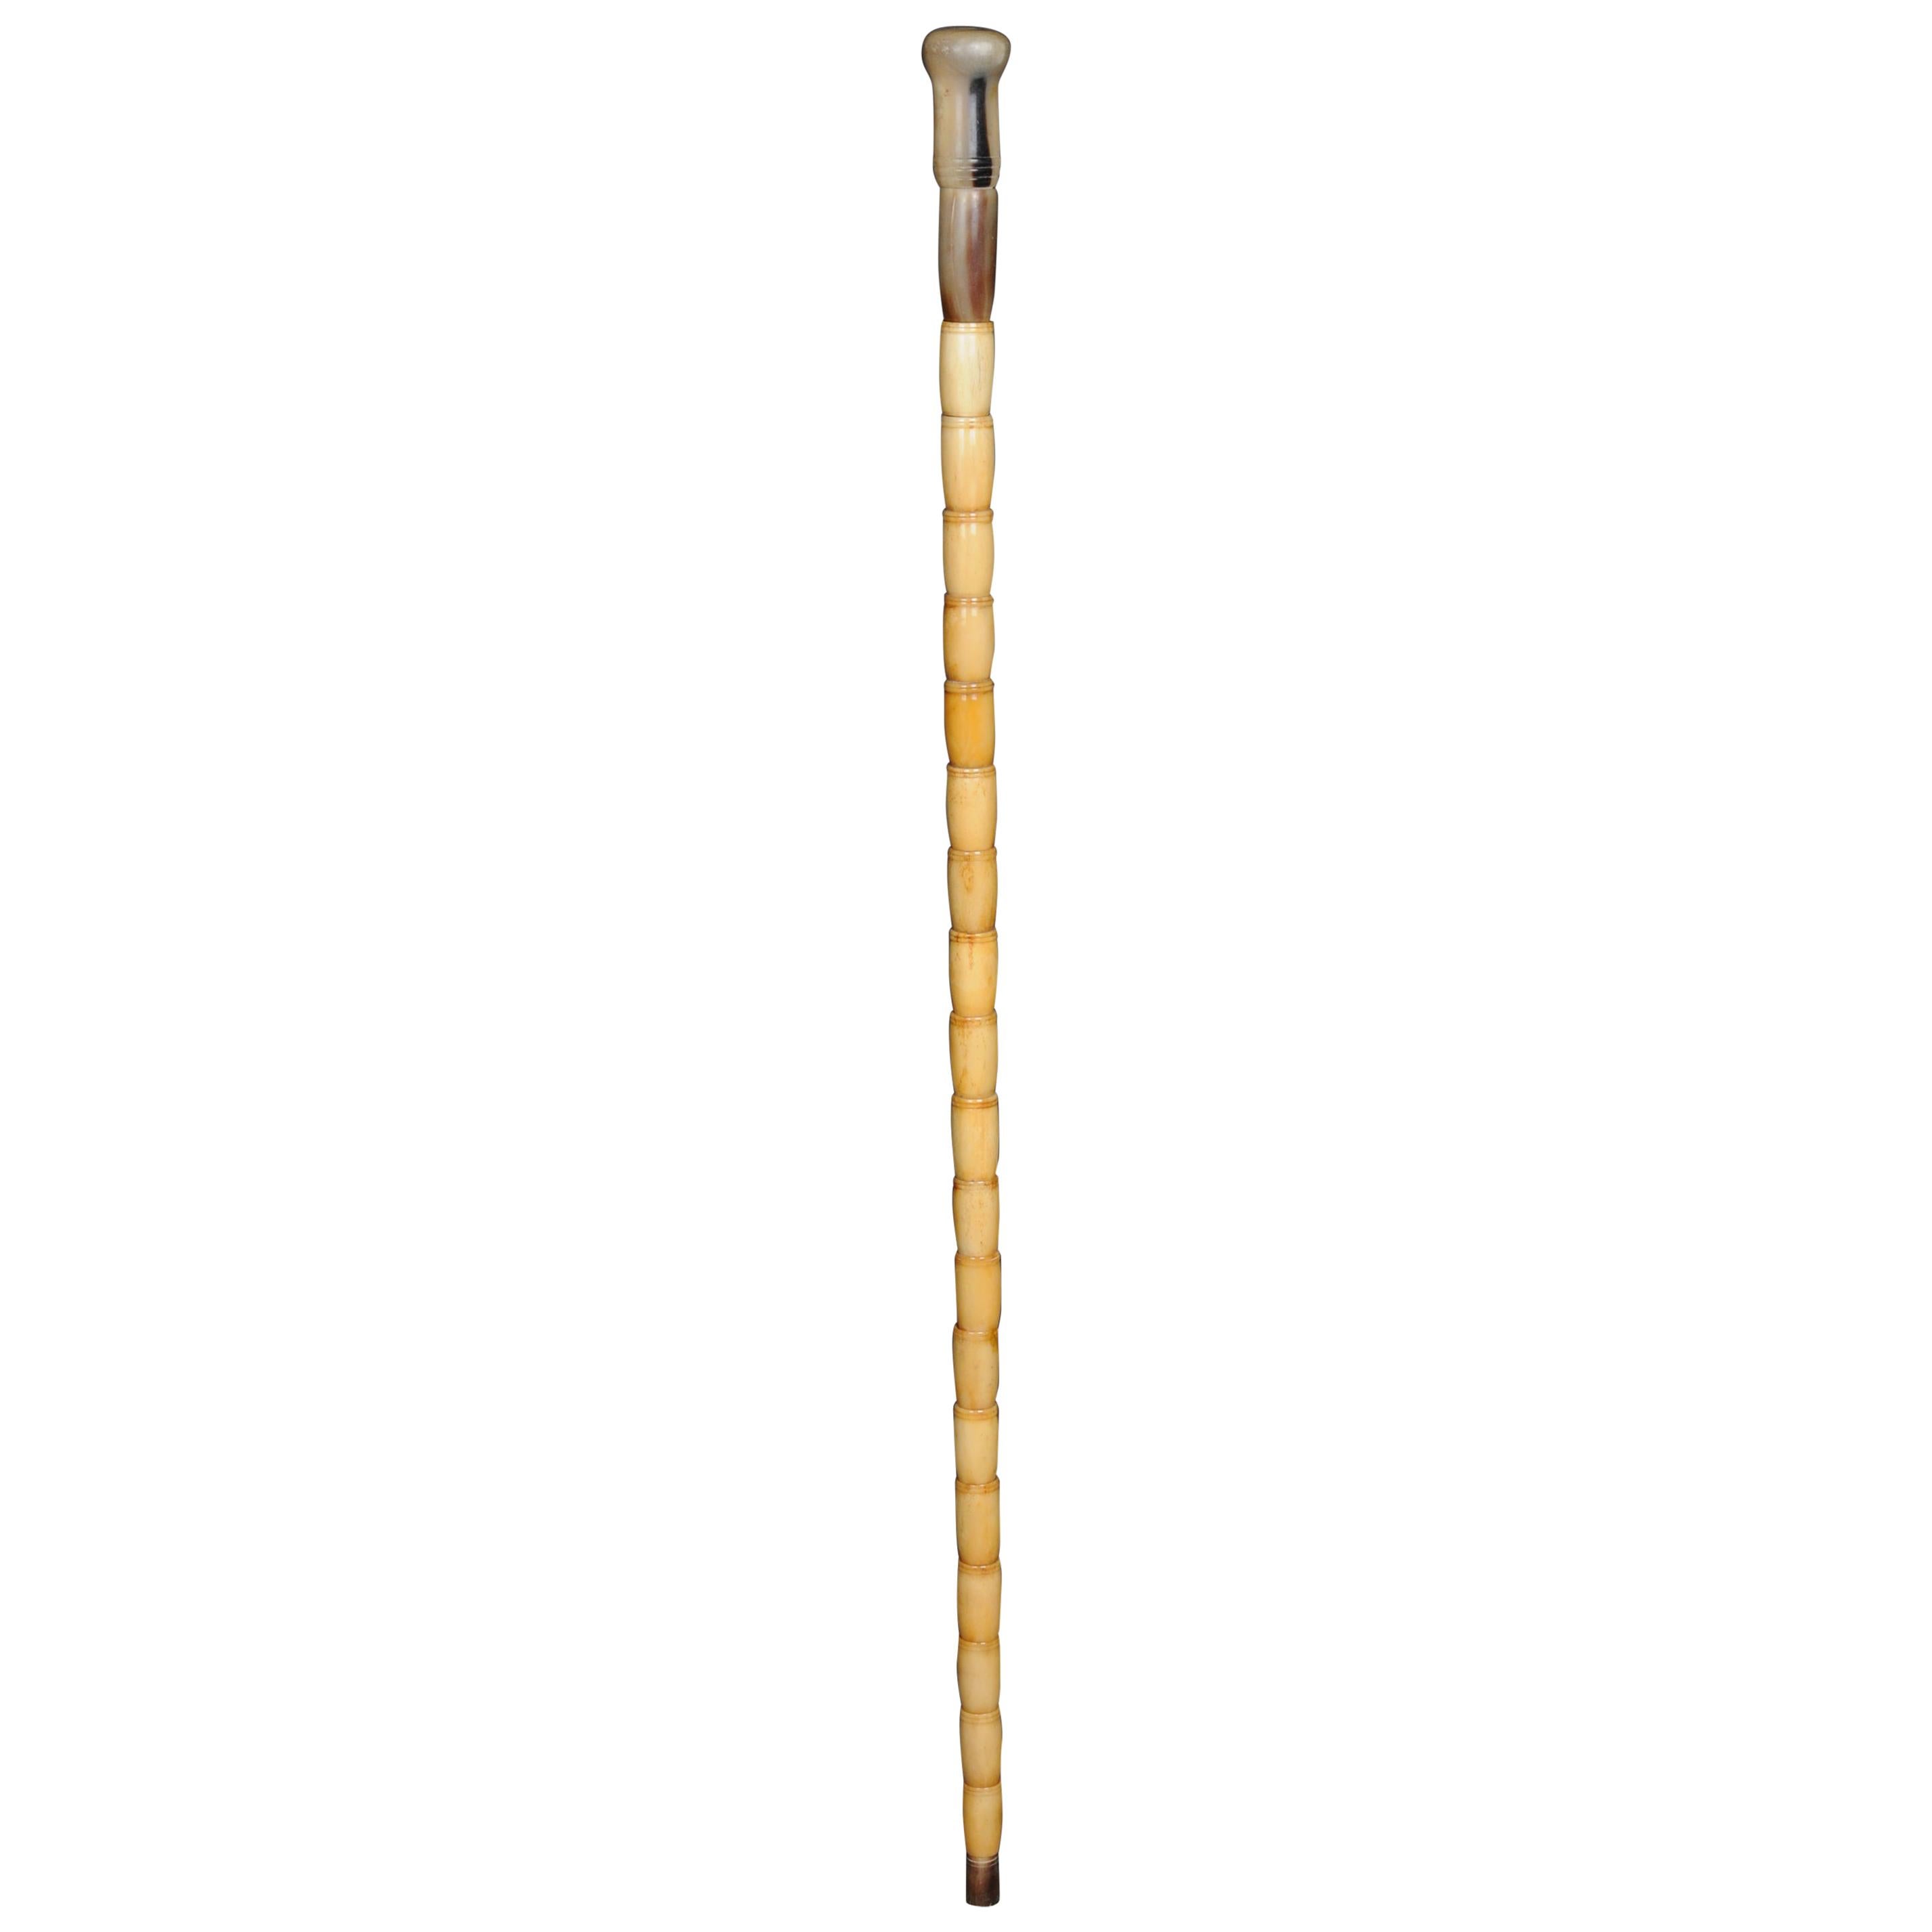 Unique Walking Stick / Strolling Stick 19th Century, Bone